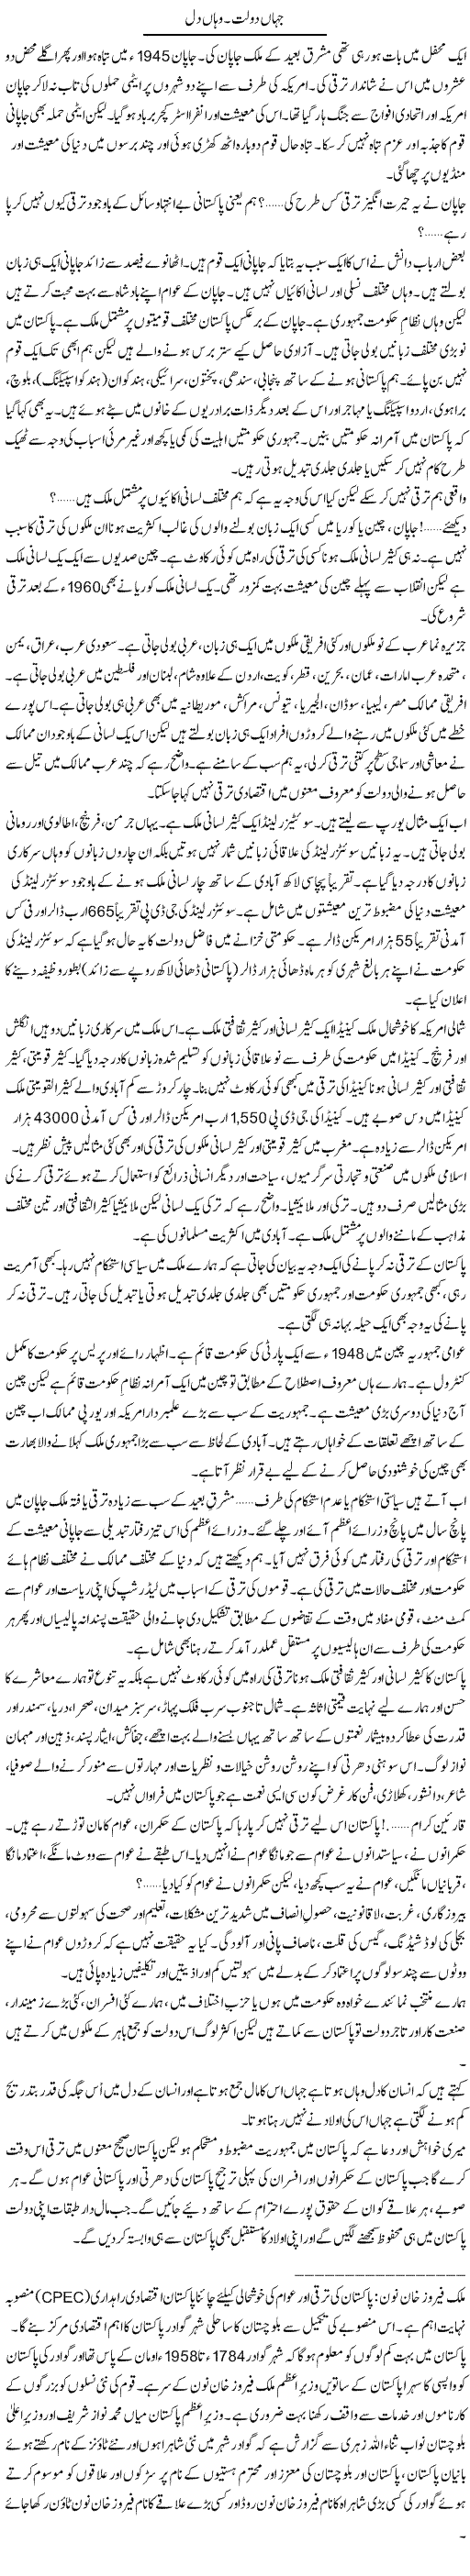 Jahan Daulat. Wahan Dil | Dr. Waqar Yousuf Azeemi | Daily Urdu Columns